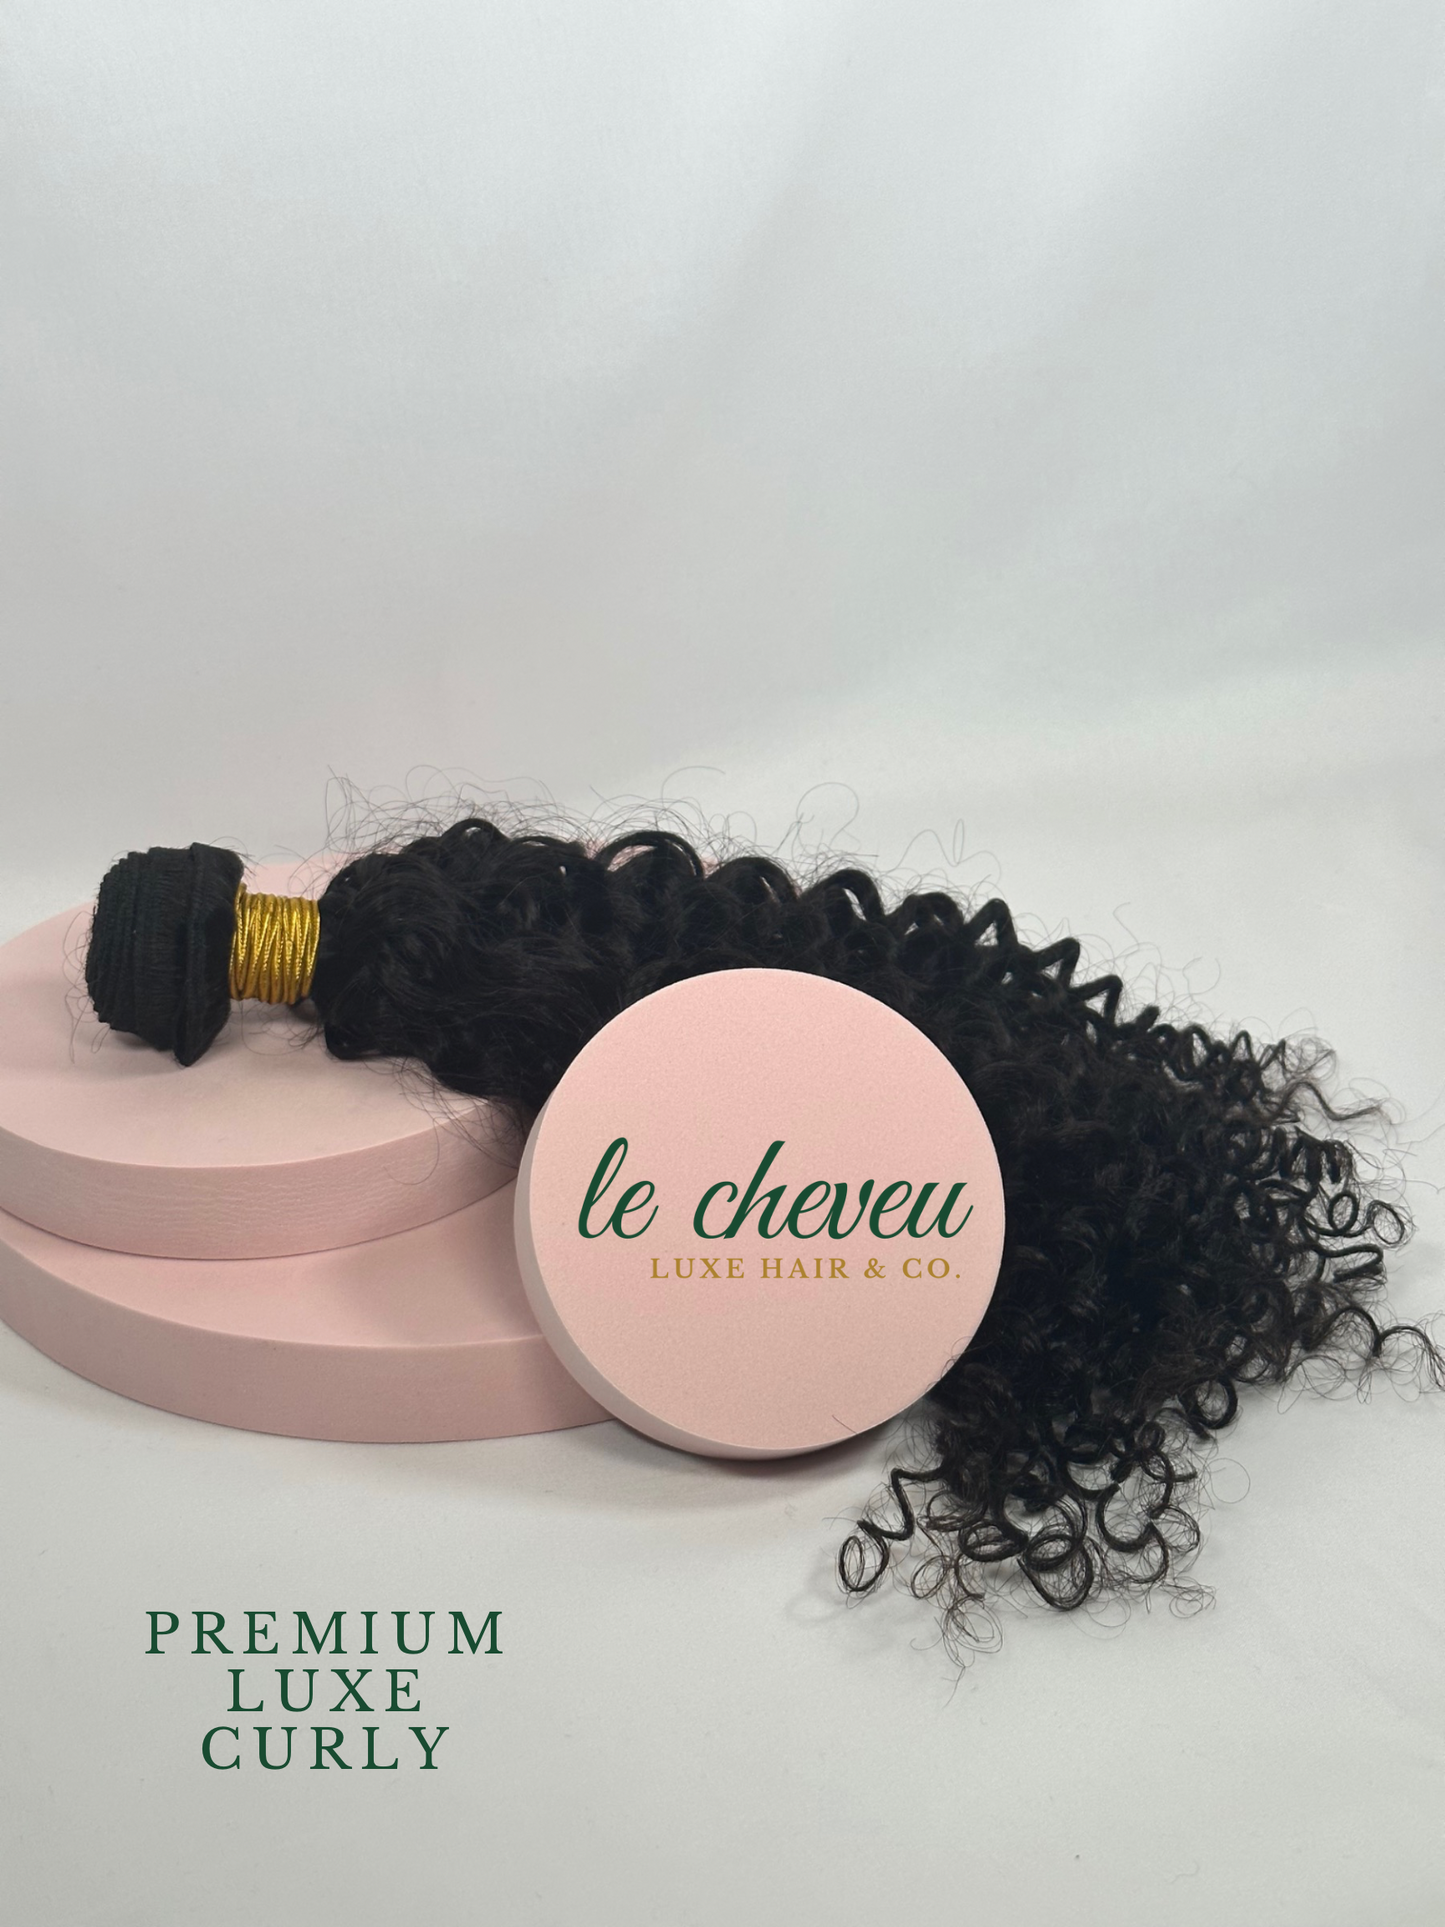 Premium Luxe Curly Bundle